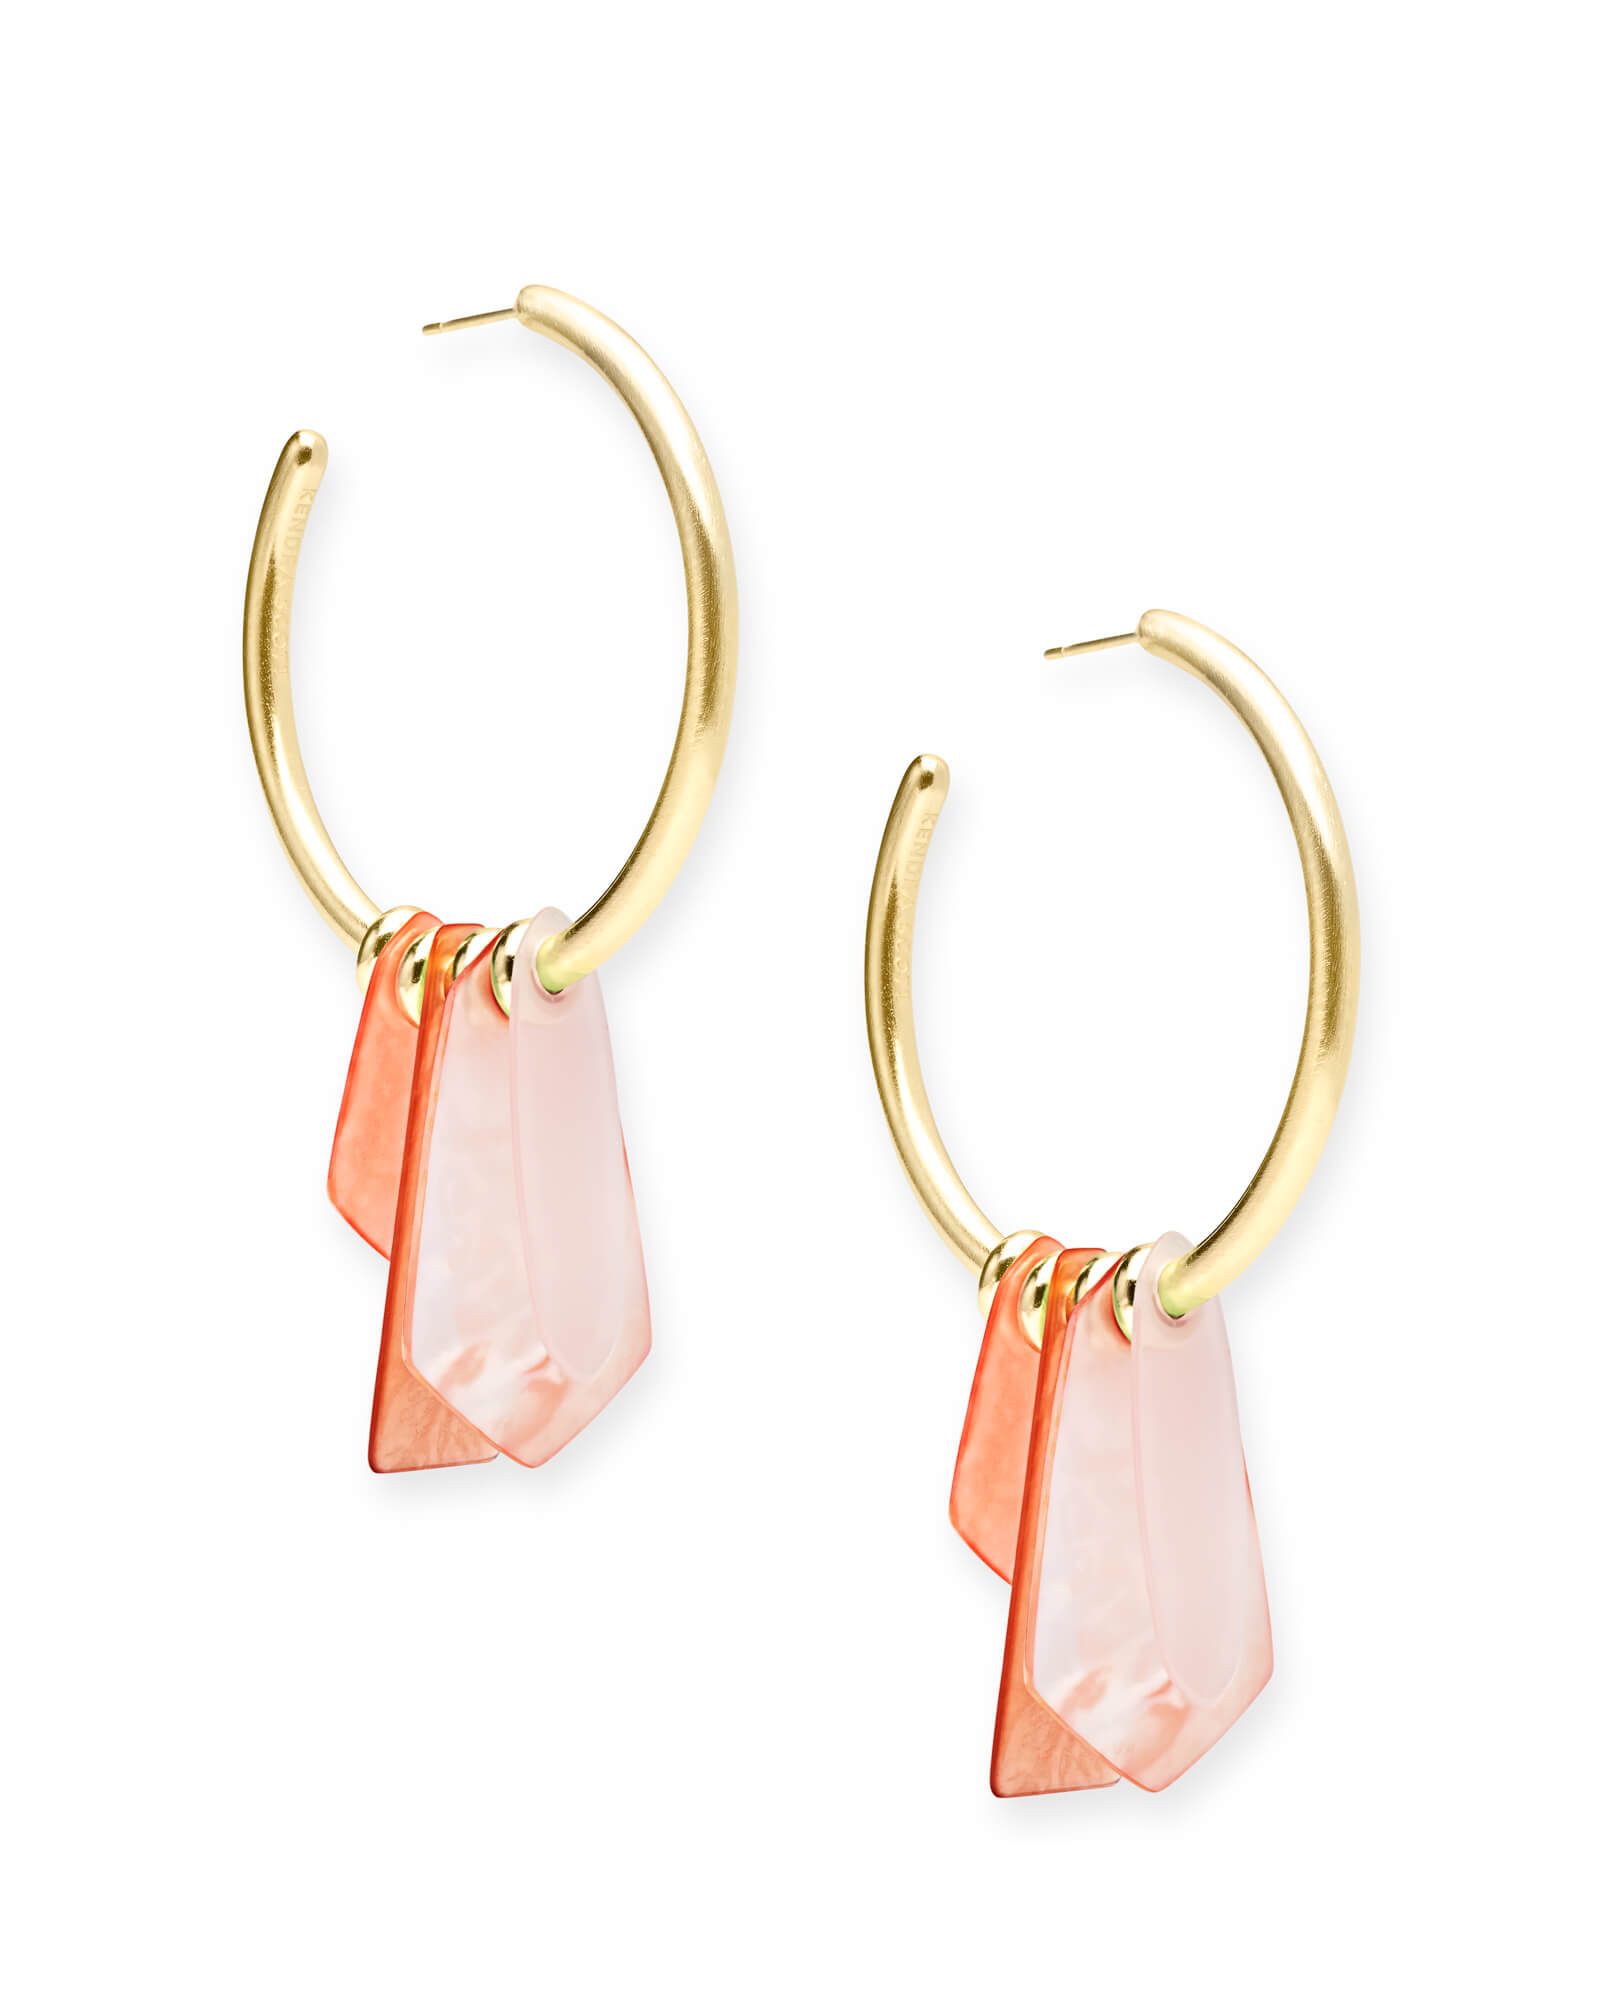 Gaby Gold Statement Earrings in Peach Mix | Kendra Scott